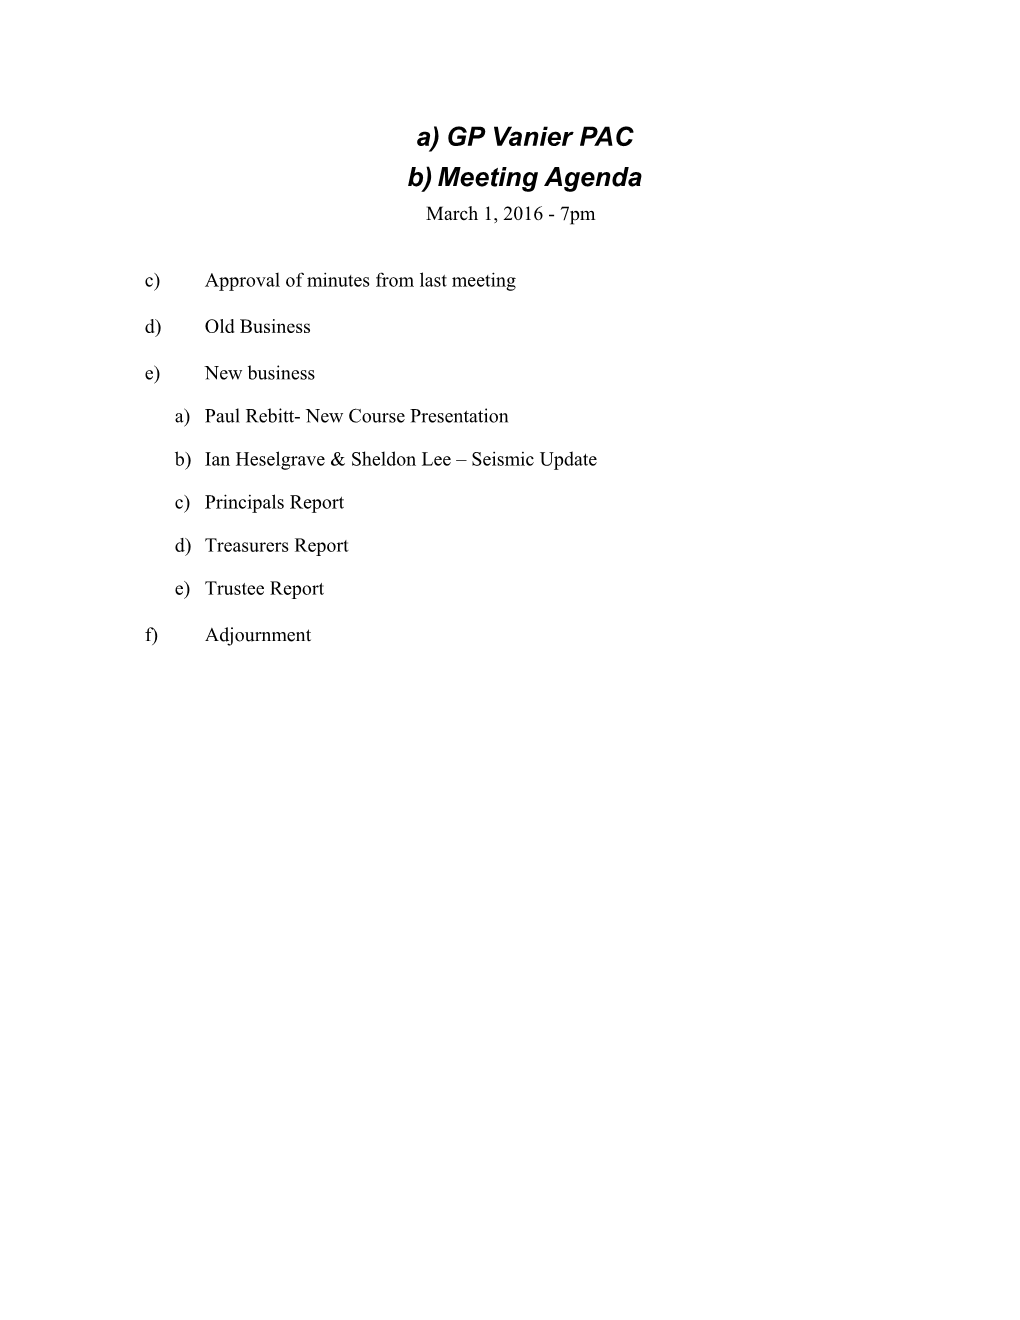 Formal Meeting Agenda s2